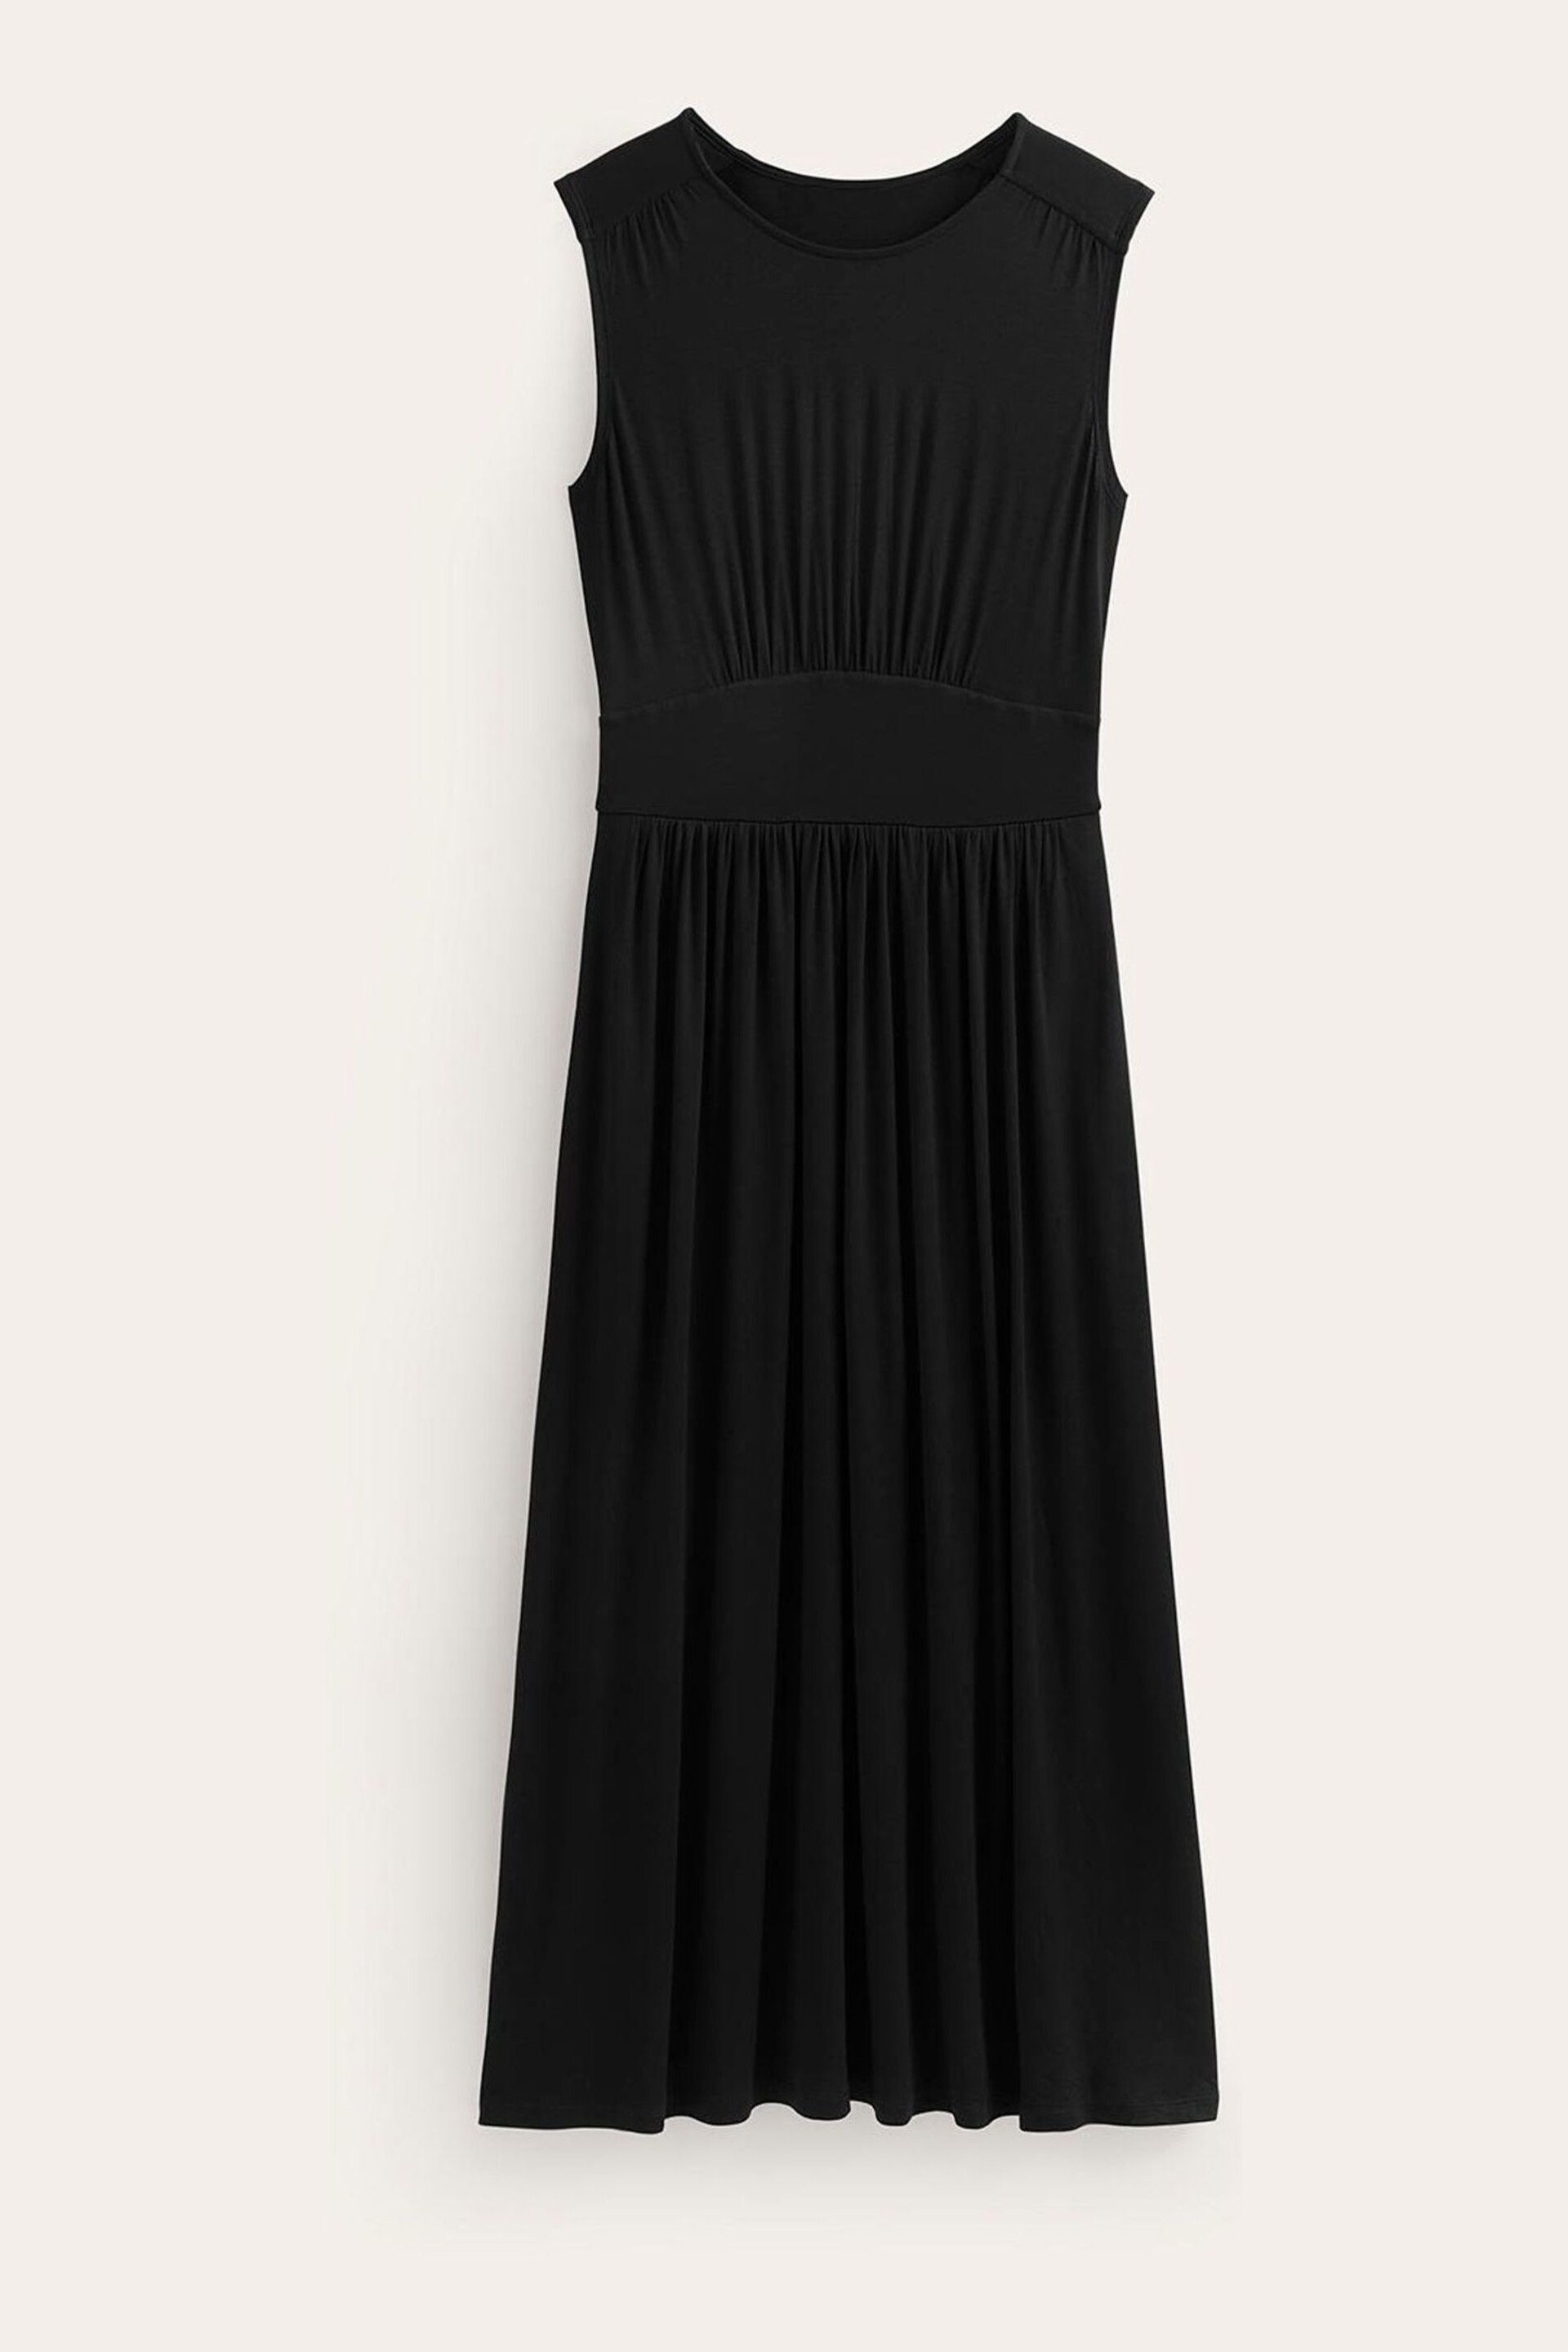 Boden Black Petite Thea Sleeveless Midi Dress - Image 5 of 5